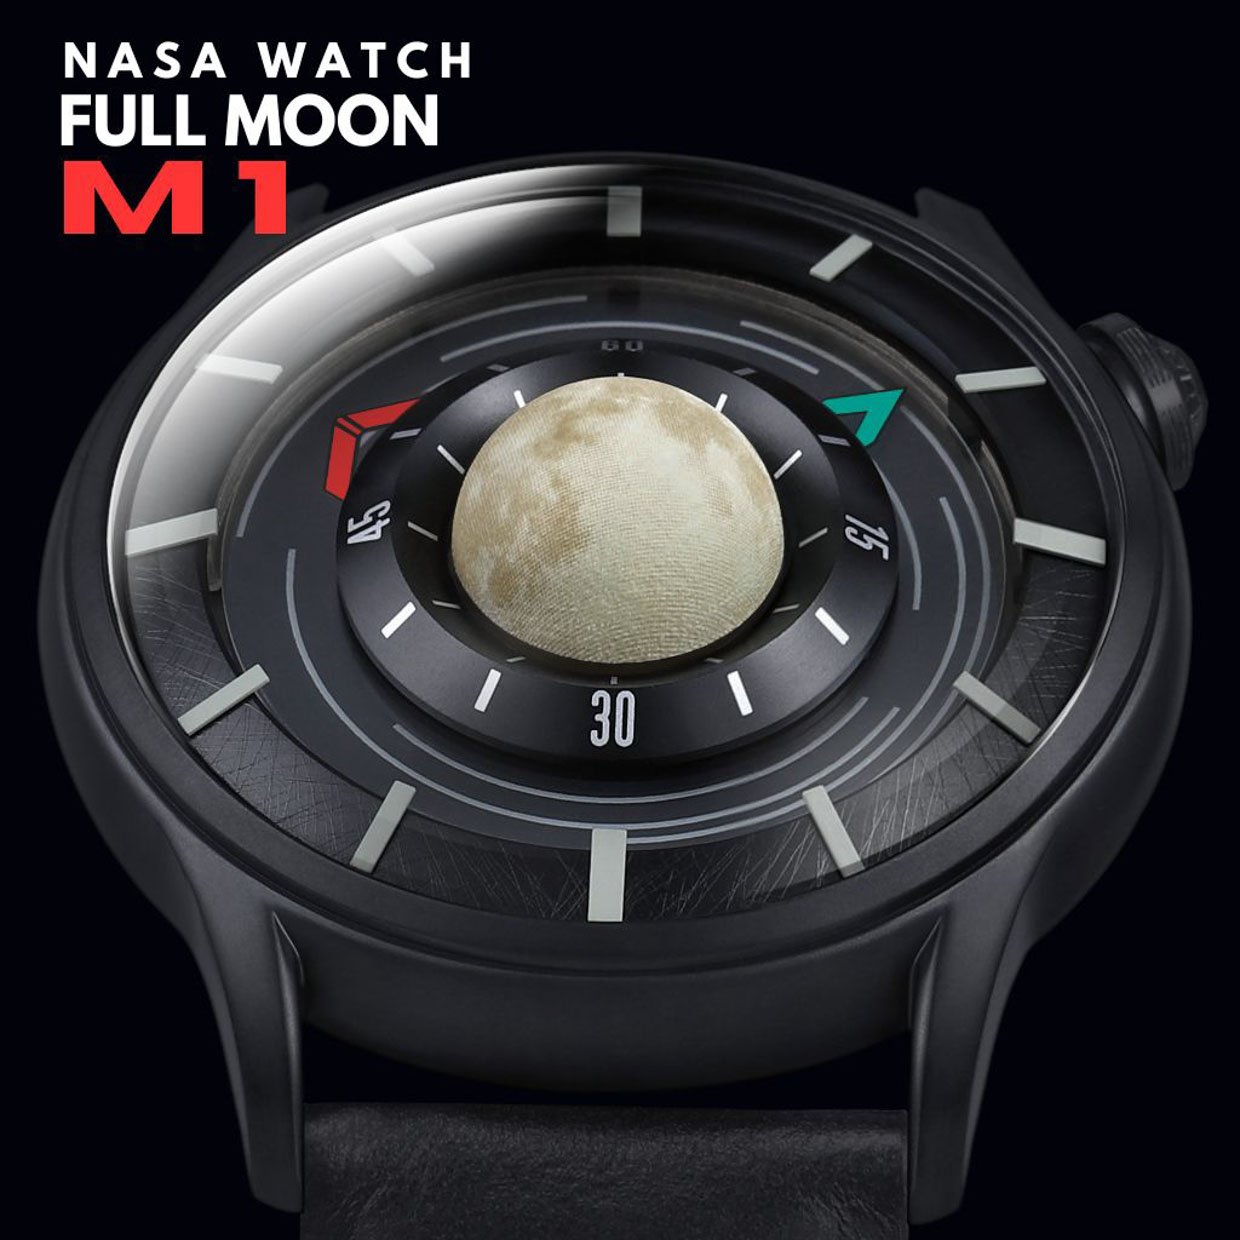 Bulova Lunar Pilot Review - Is it the best value Moon Watch? - YouTube